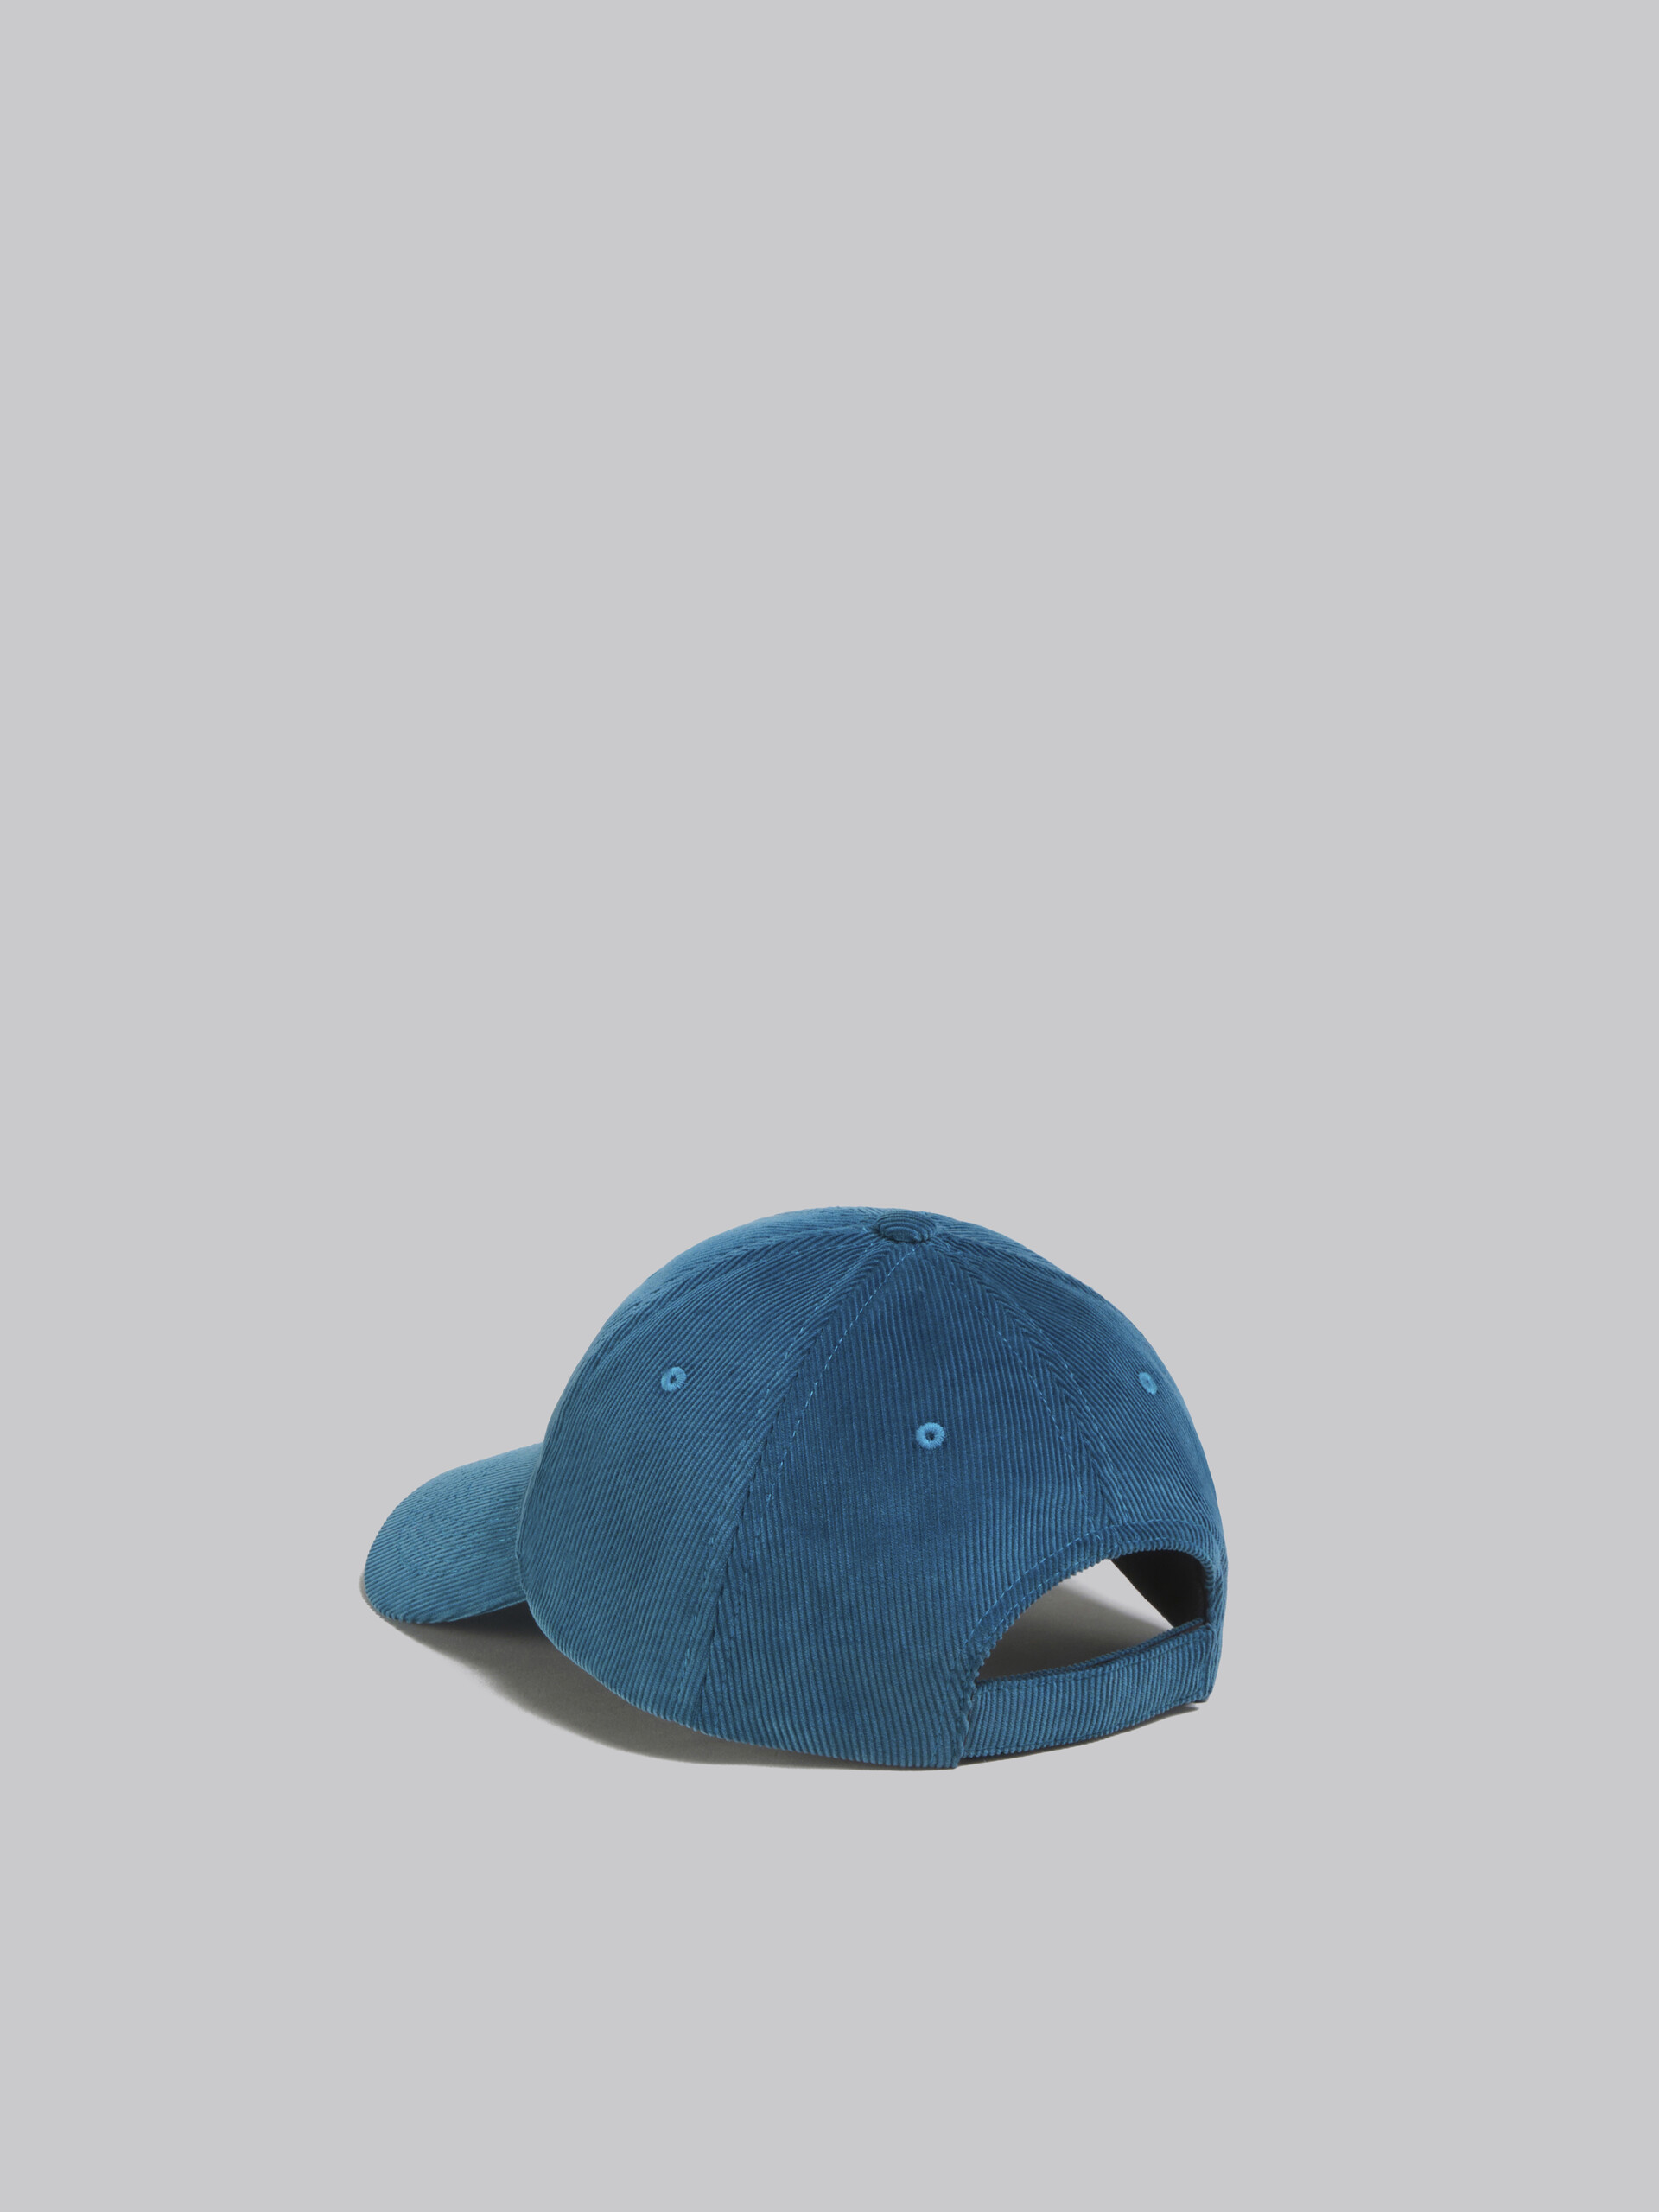 Blue corduroy baseball cap with sponge logo - Hats - Image 3